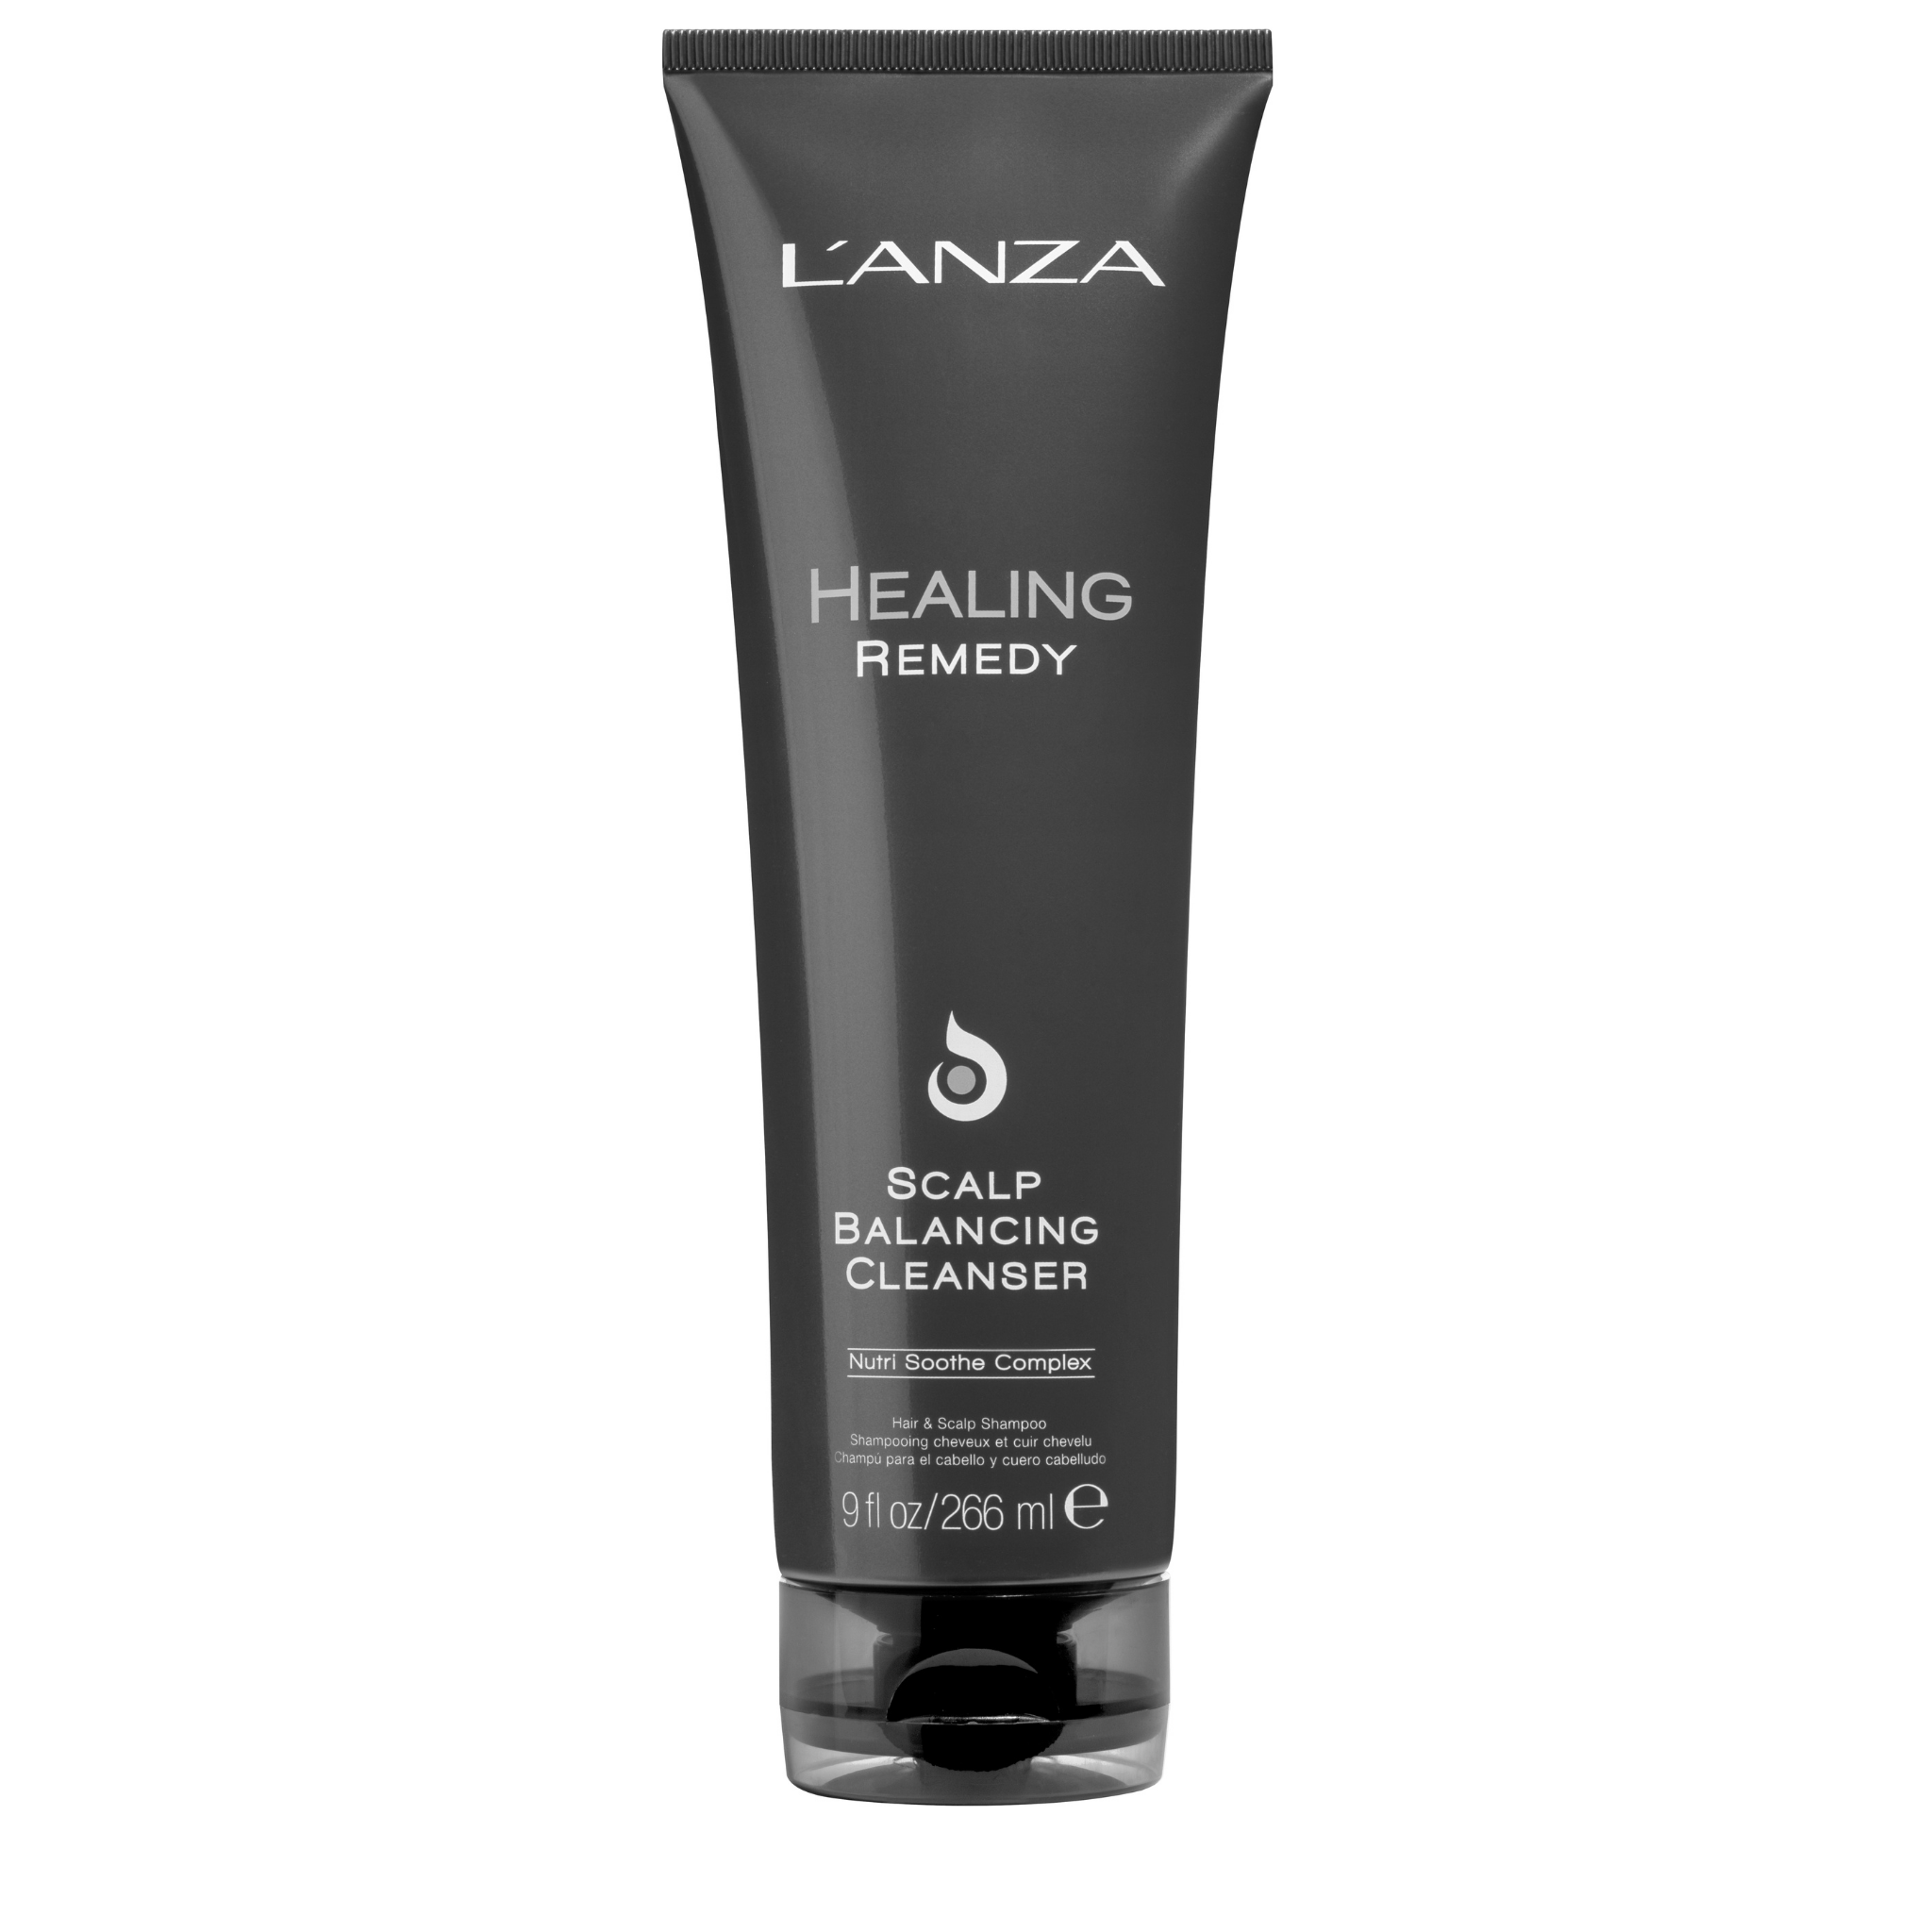 L'Anza. Healing Remedy Shampoing Apaisant Scalp Balancing - 266 ml - Concept C. Shop